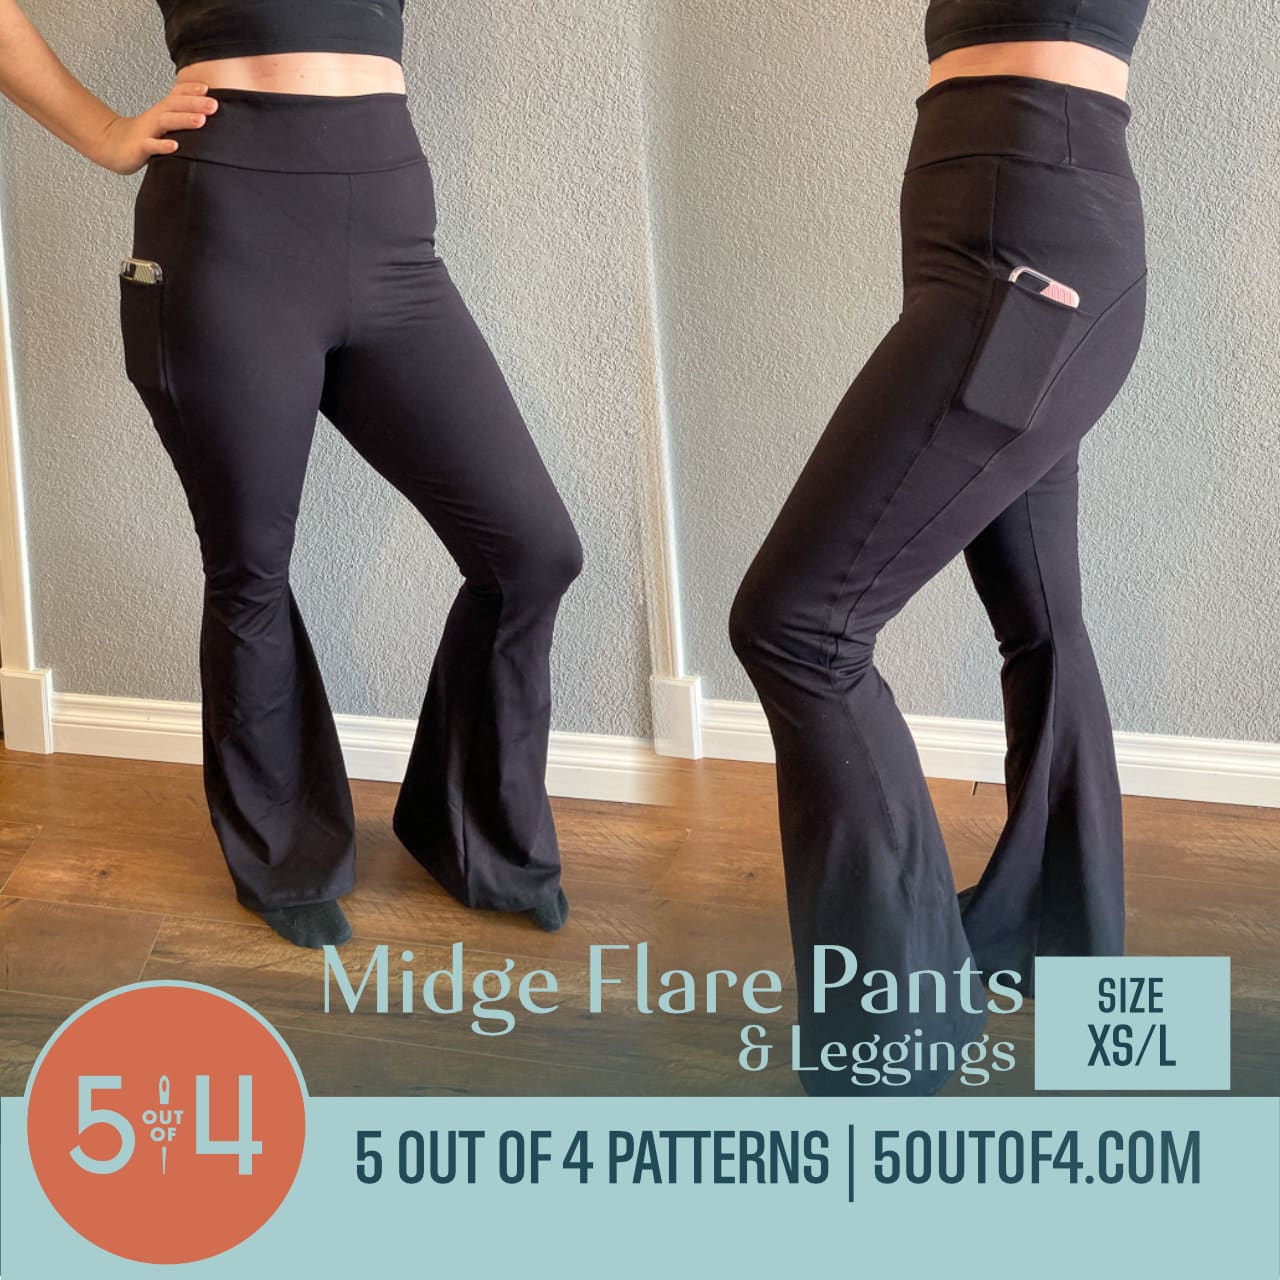 Midge Flare Pants and Leggings Size XSL 2